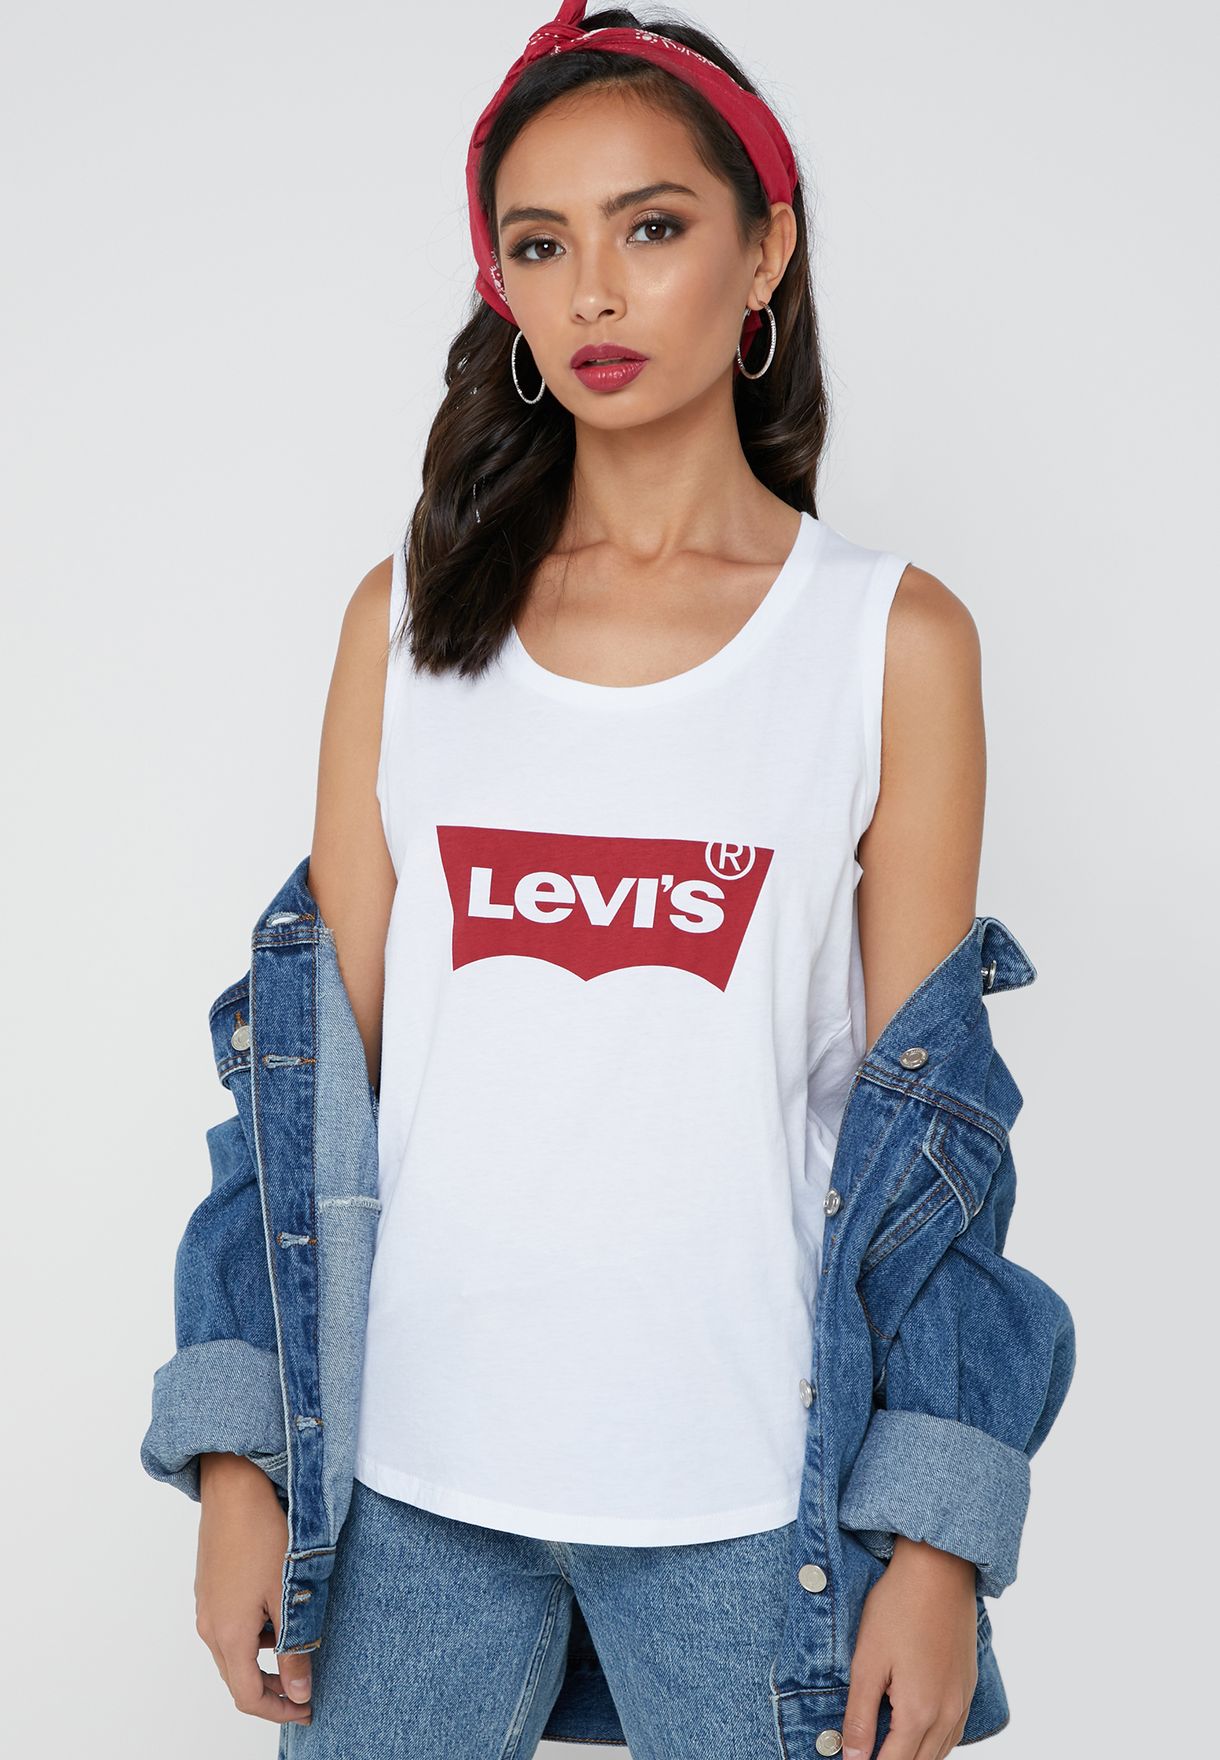 levis top for ladies